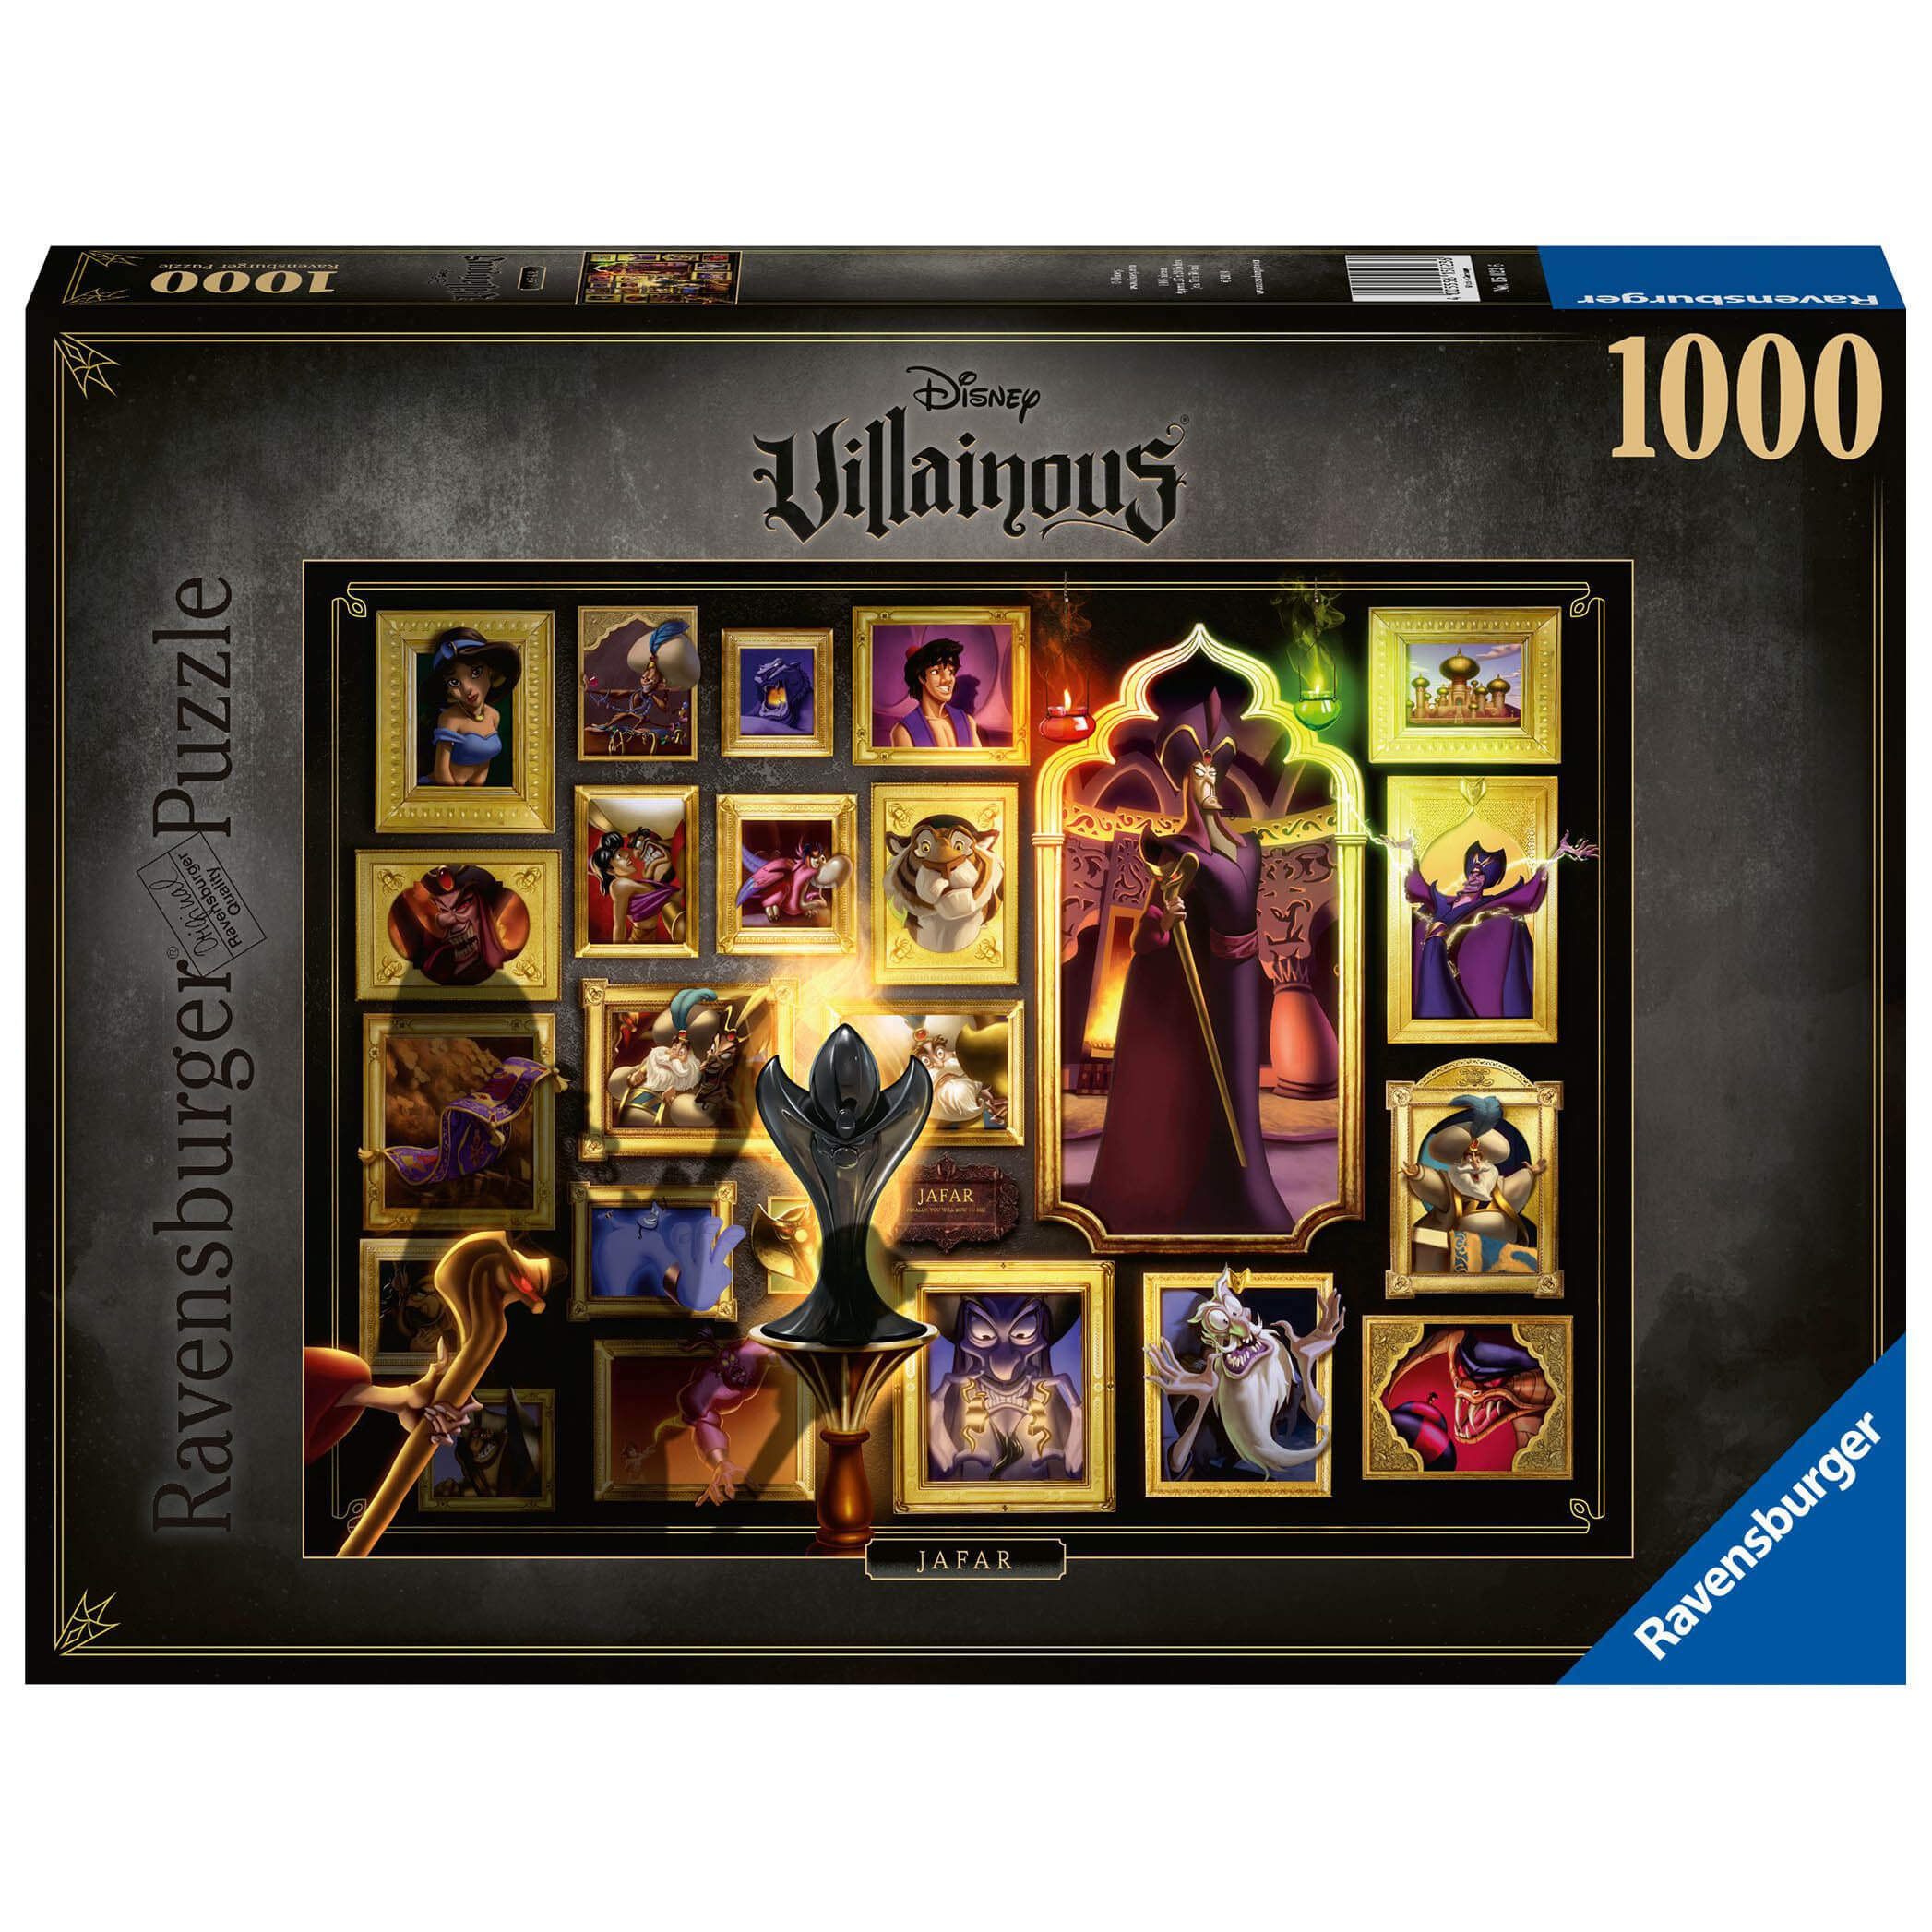 Ravensburger Disney Villainous Jafar 1000 Piece Jigsaw Puzzle